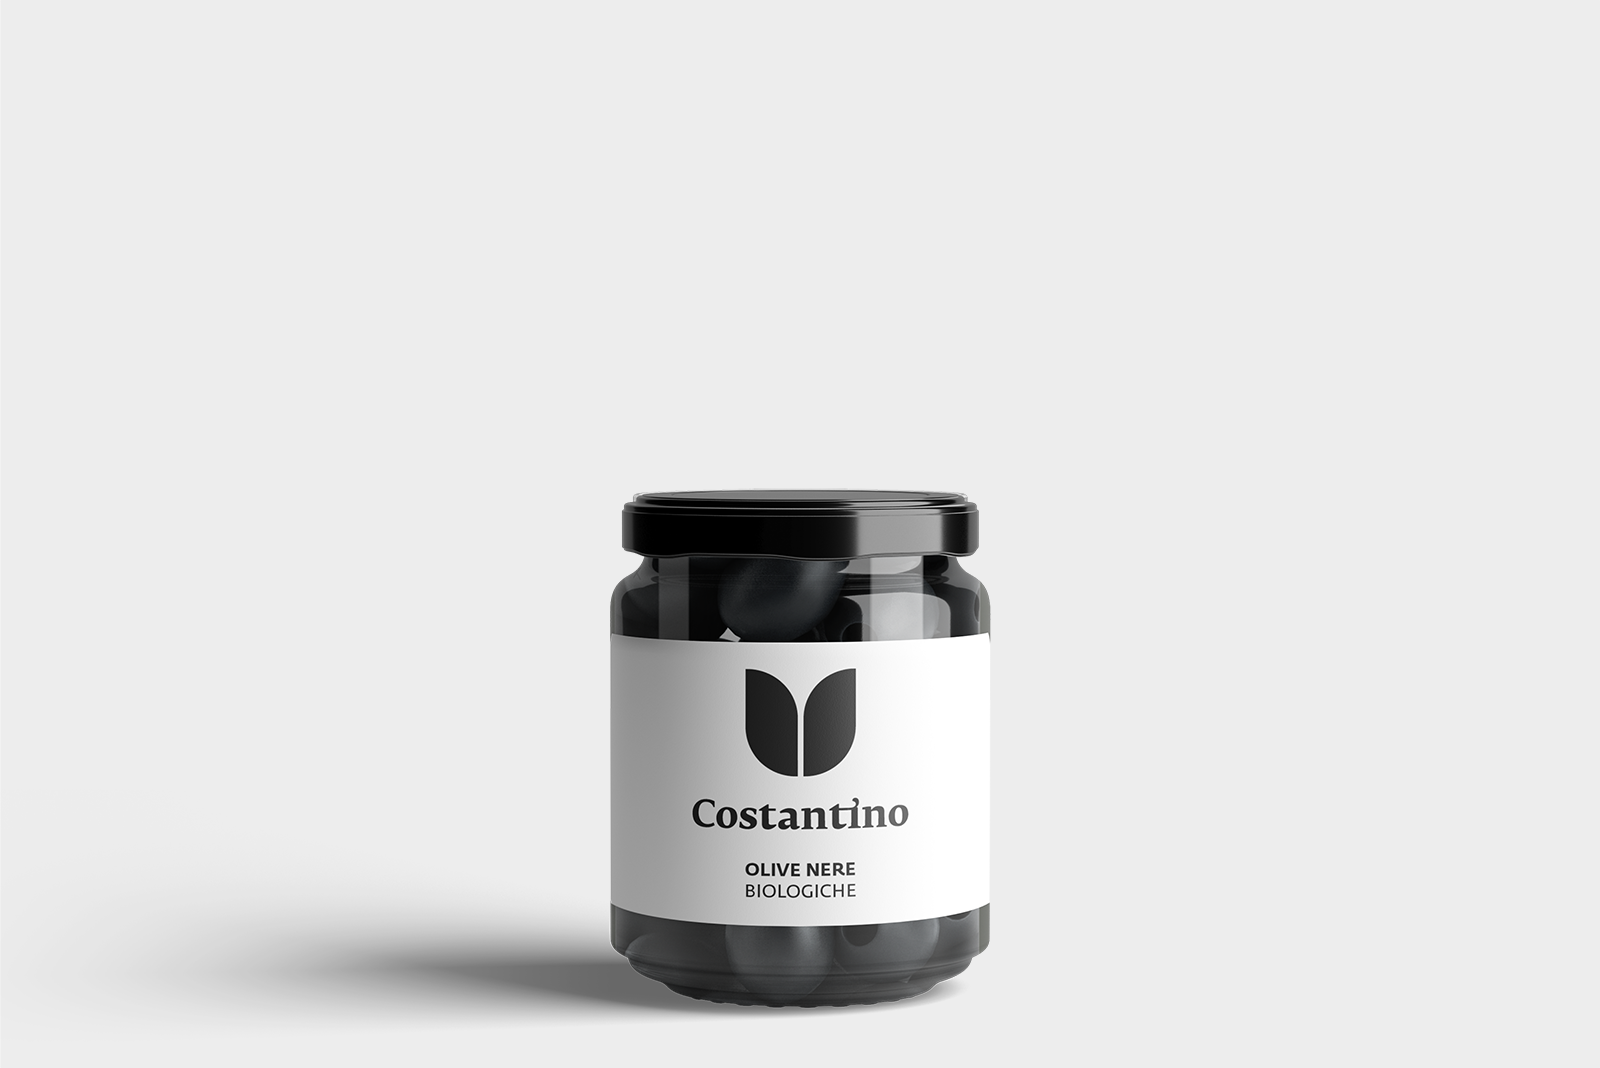 Costantino - Olive nere biologiche - vasetto 330g